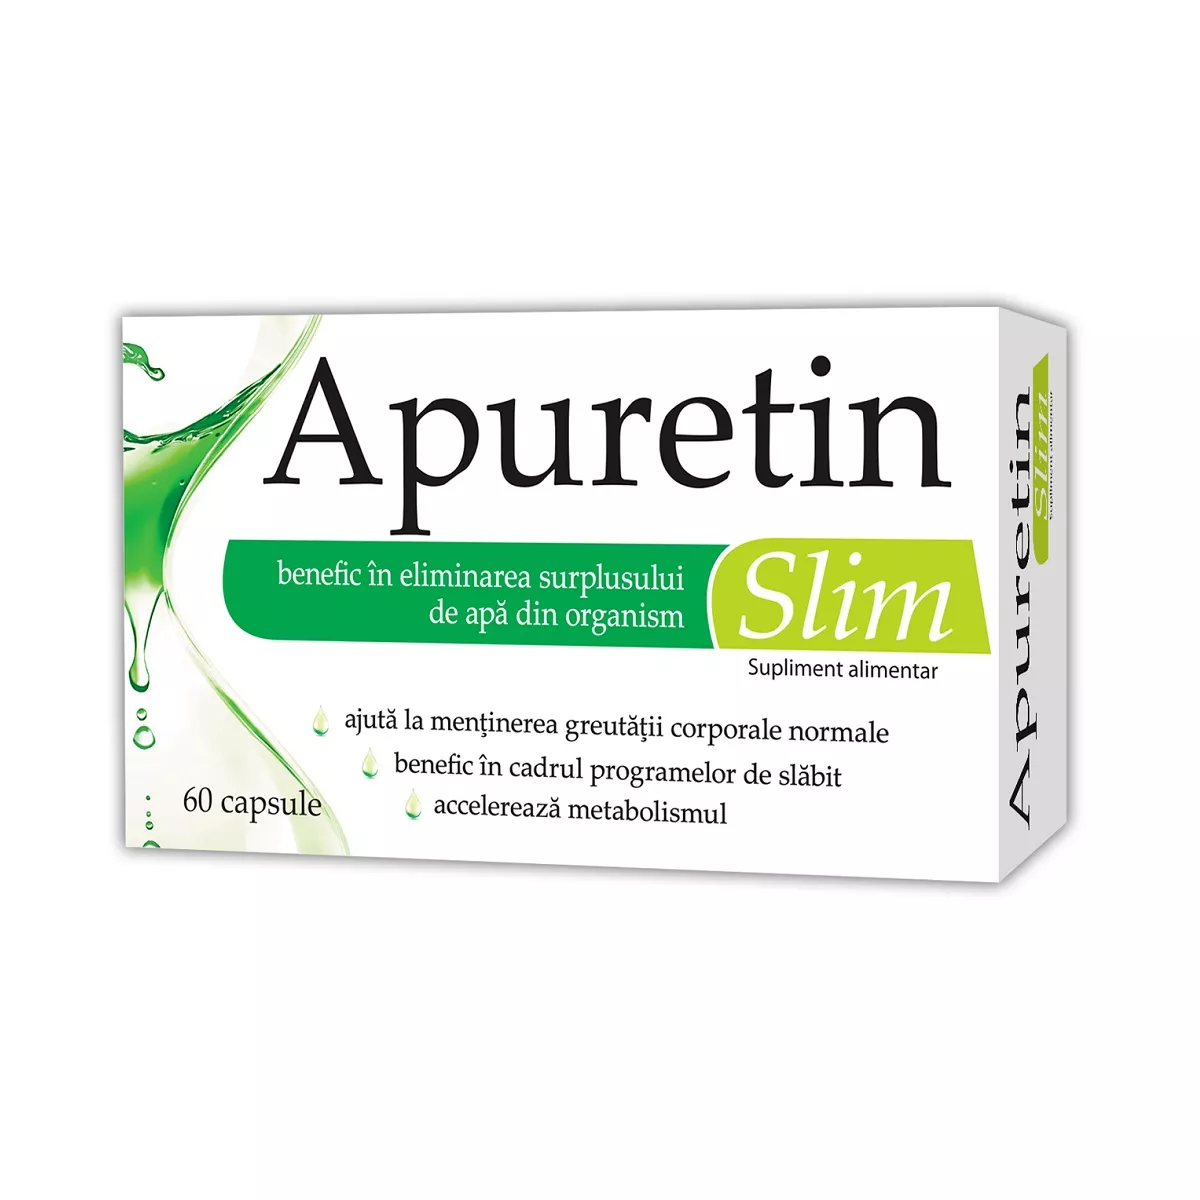 Apuretin Slim, 60 capsule, Zdrovit, [],nordpharm.ro